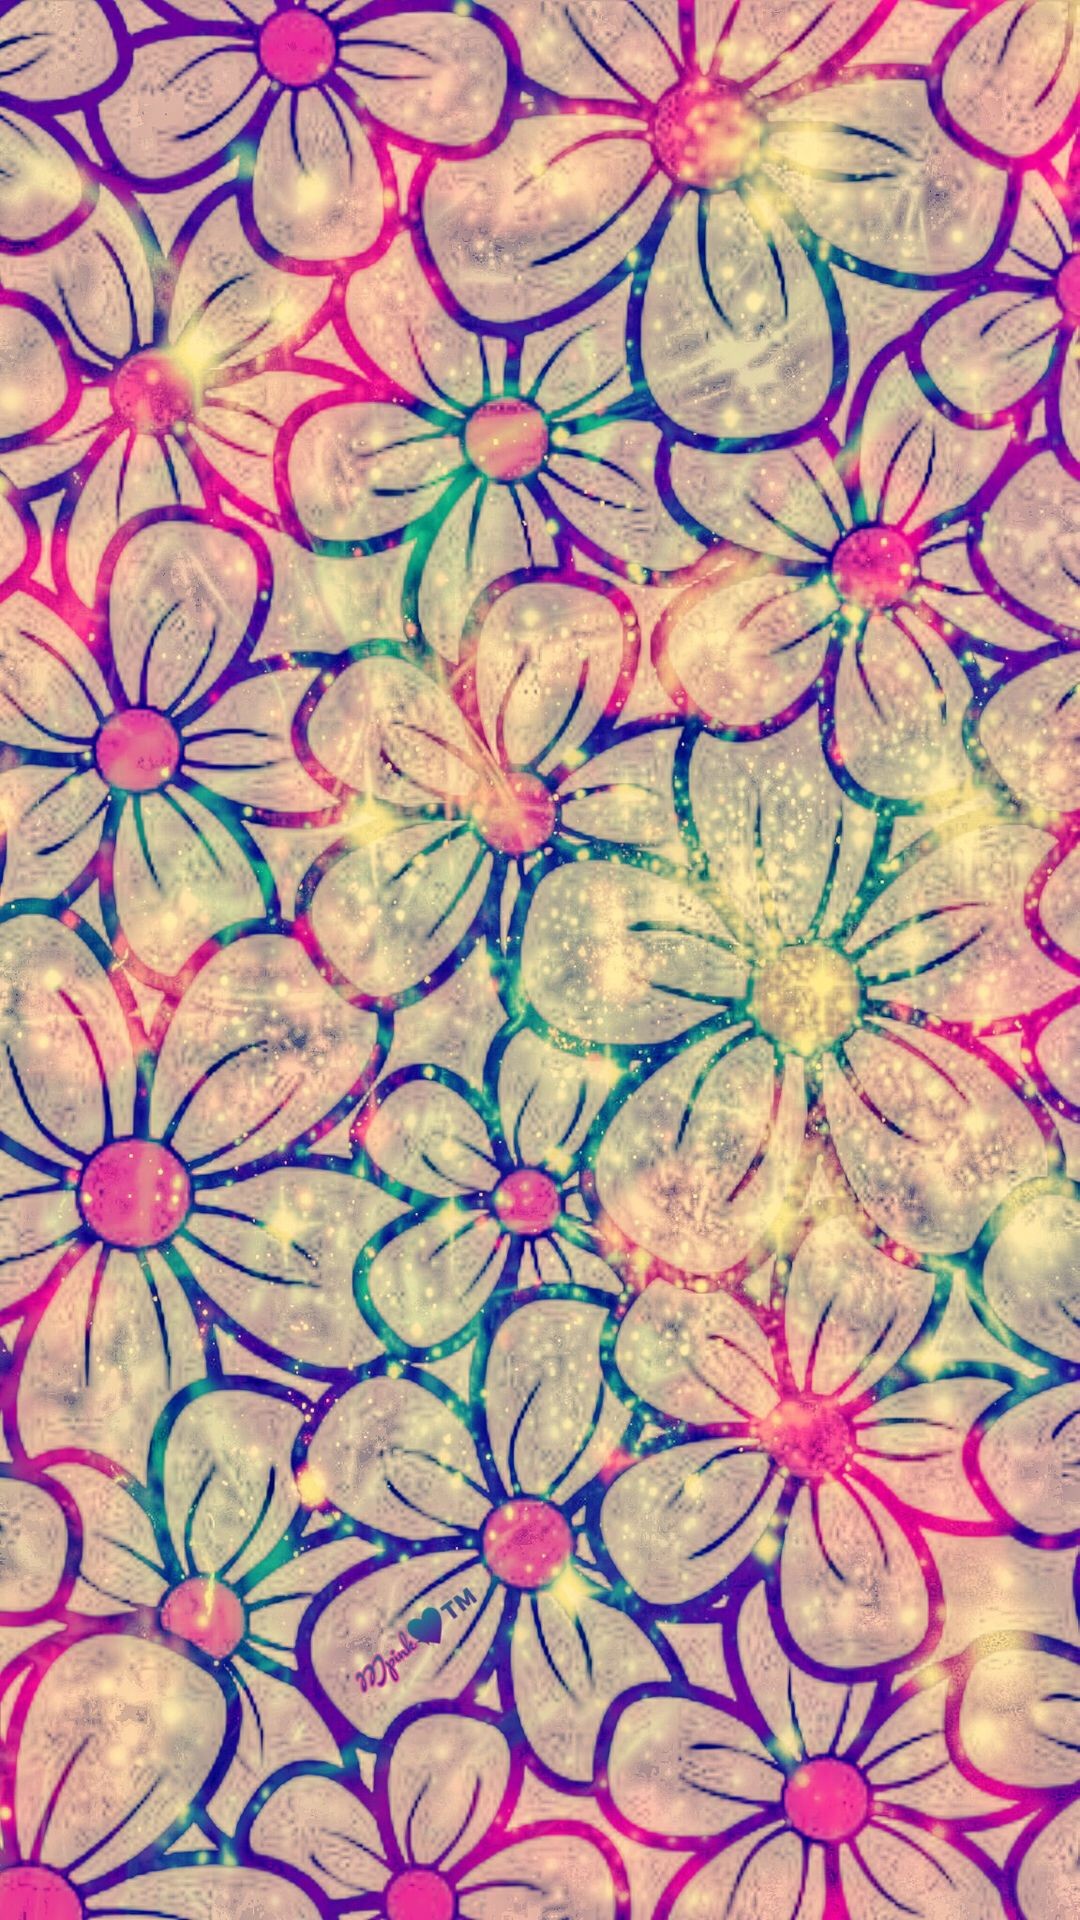 1080x1920 Vintage Flowers Galaxy Wallpaper #androidwallpaper #iphonewallpaper # wallpaper #galaxy #sparkle #glitter #lockscreen #pretty #pink #cute #girly  #vintage ...